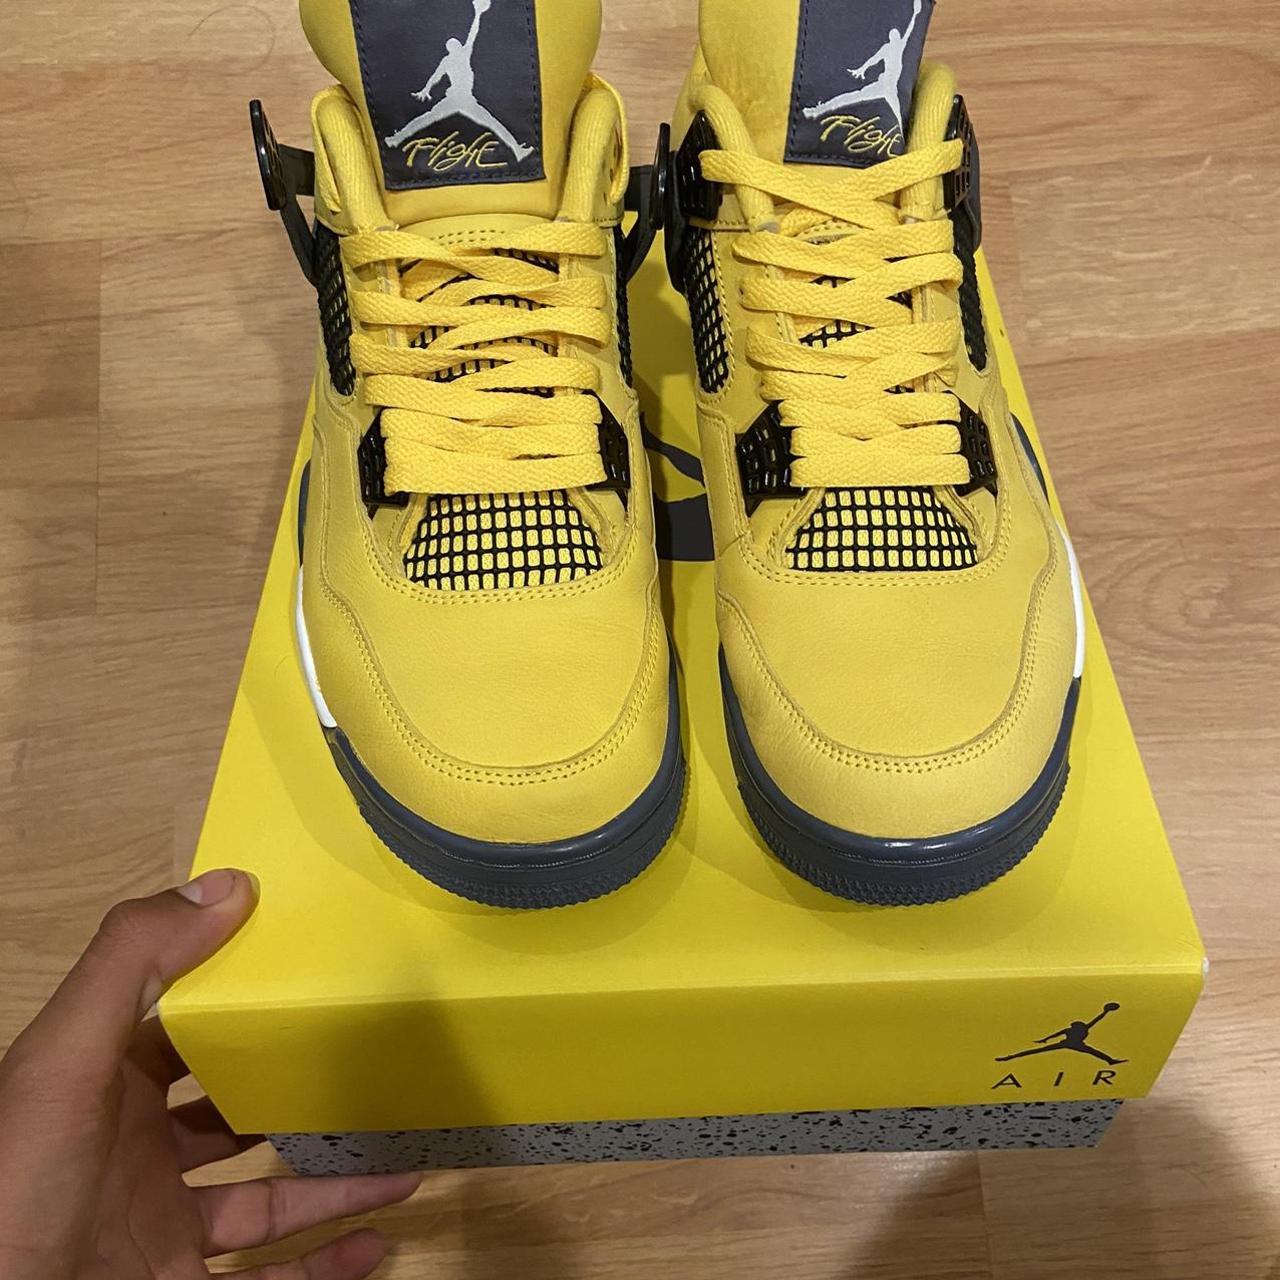 Nike Air Jordan 4 Lightning | size 9.5 | OG box |... - Depop